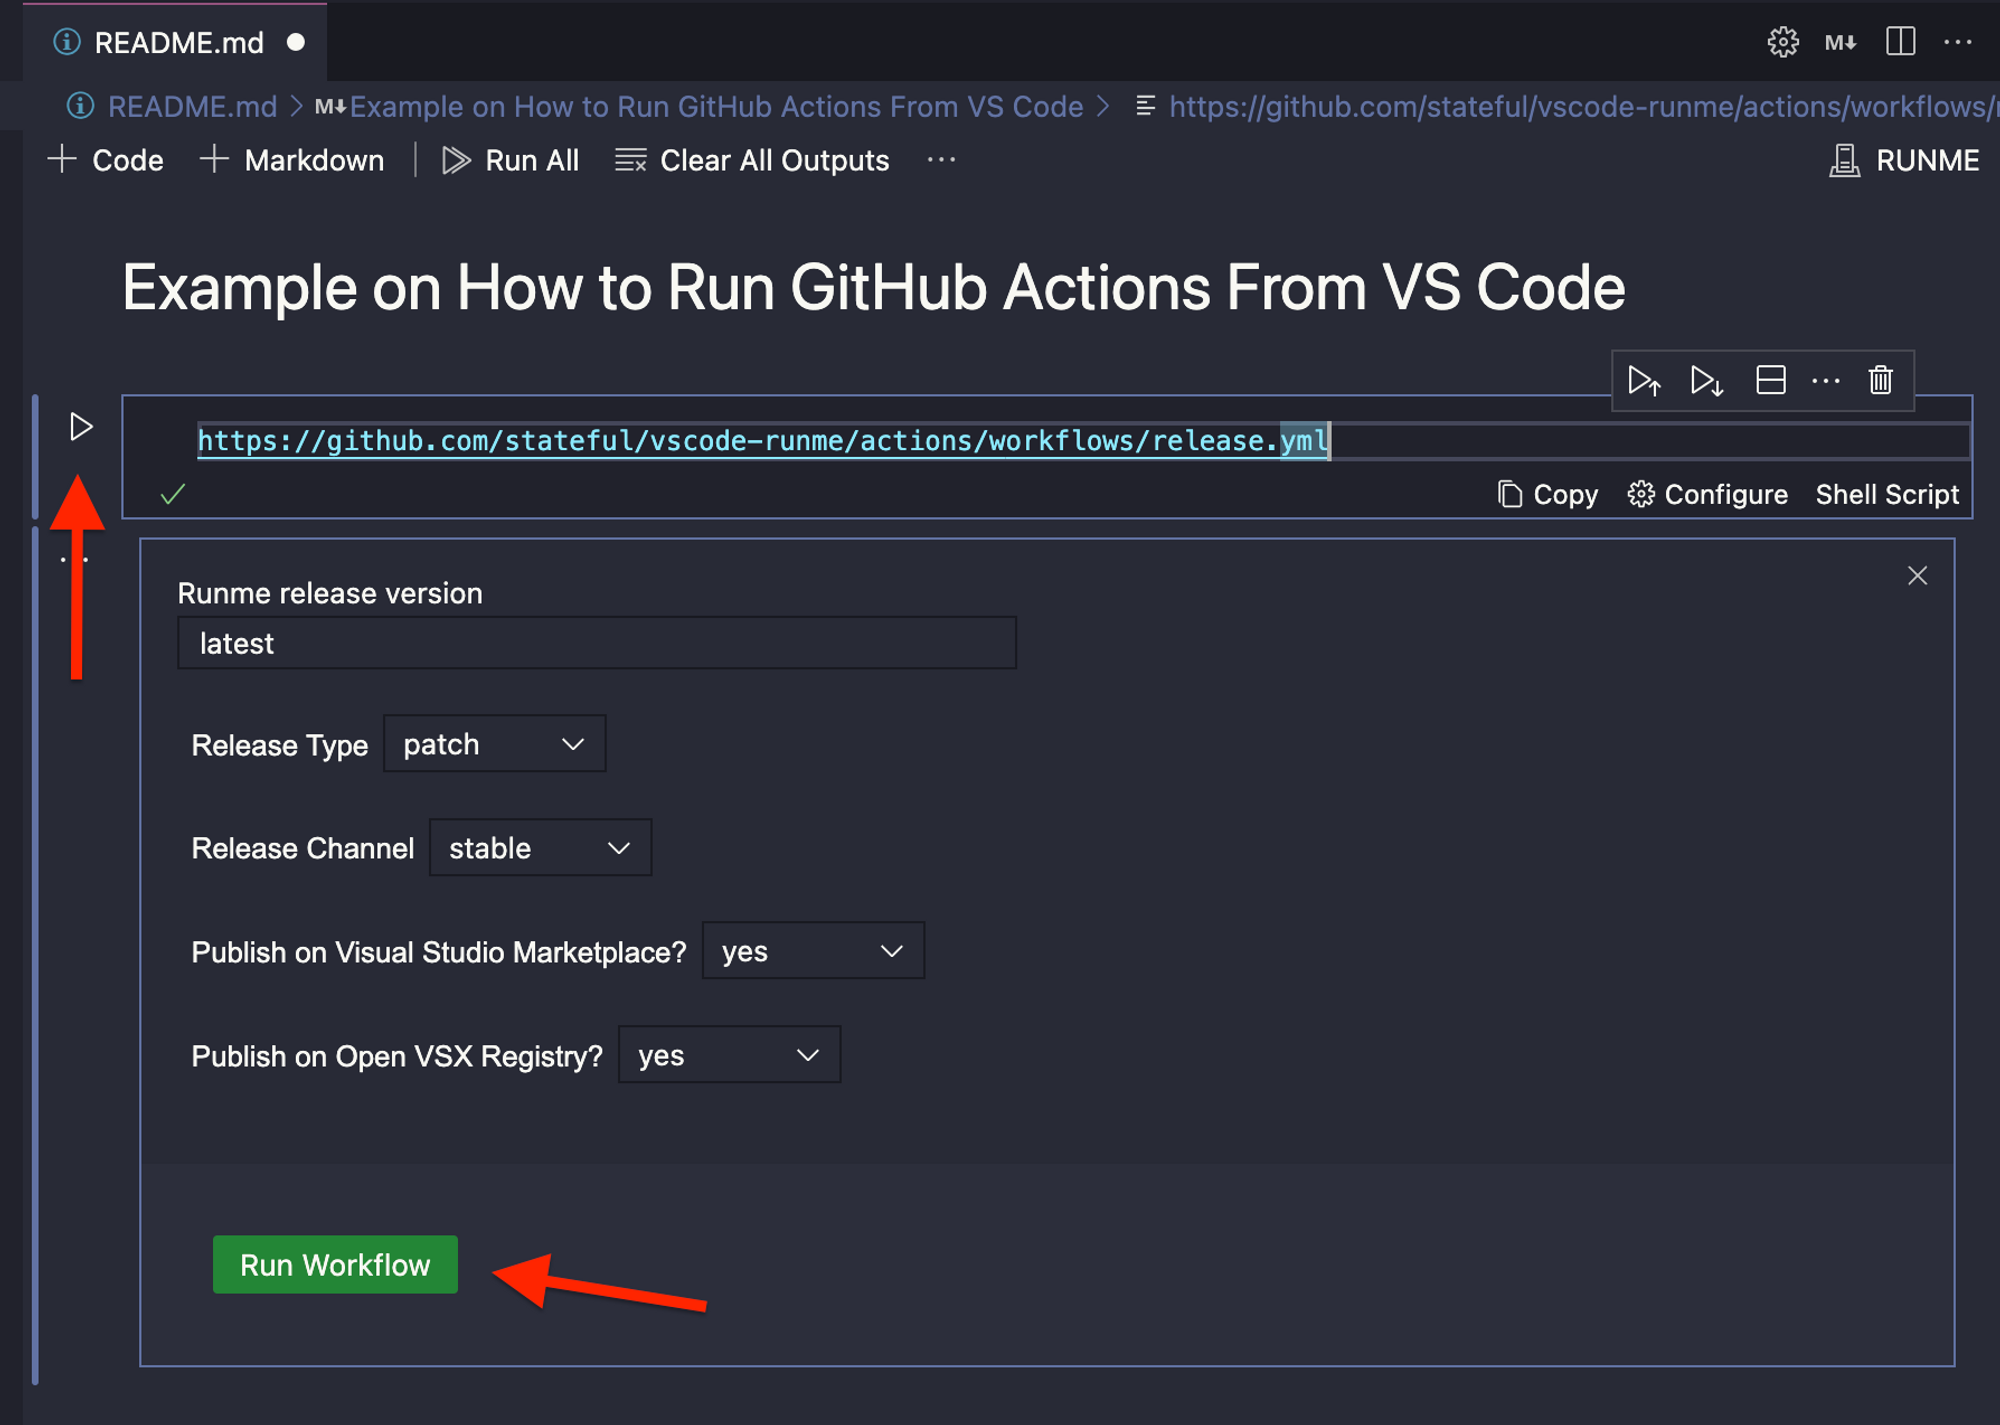 paste GitHub action URL